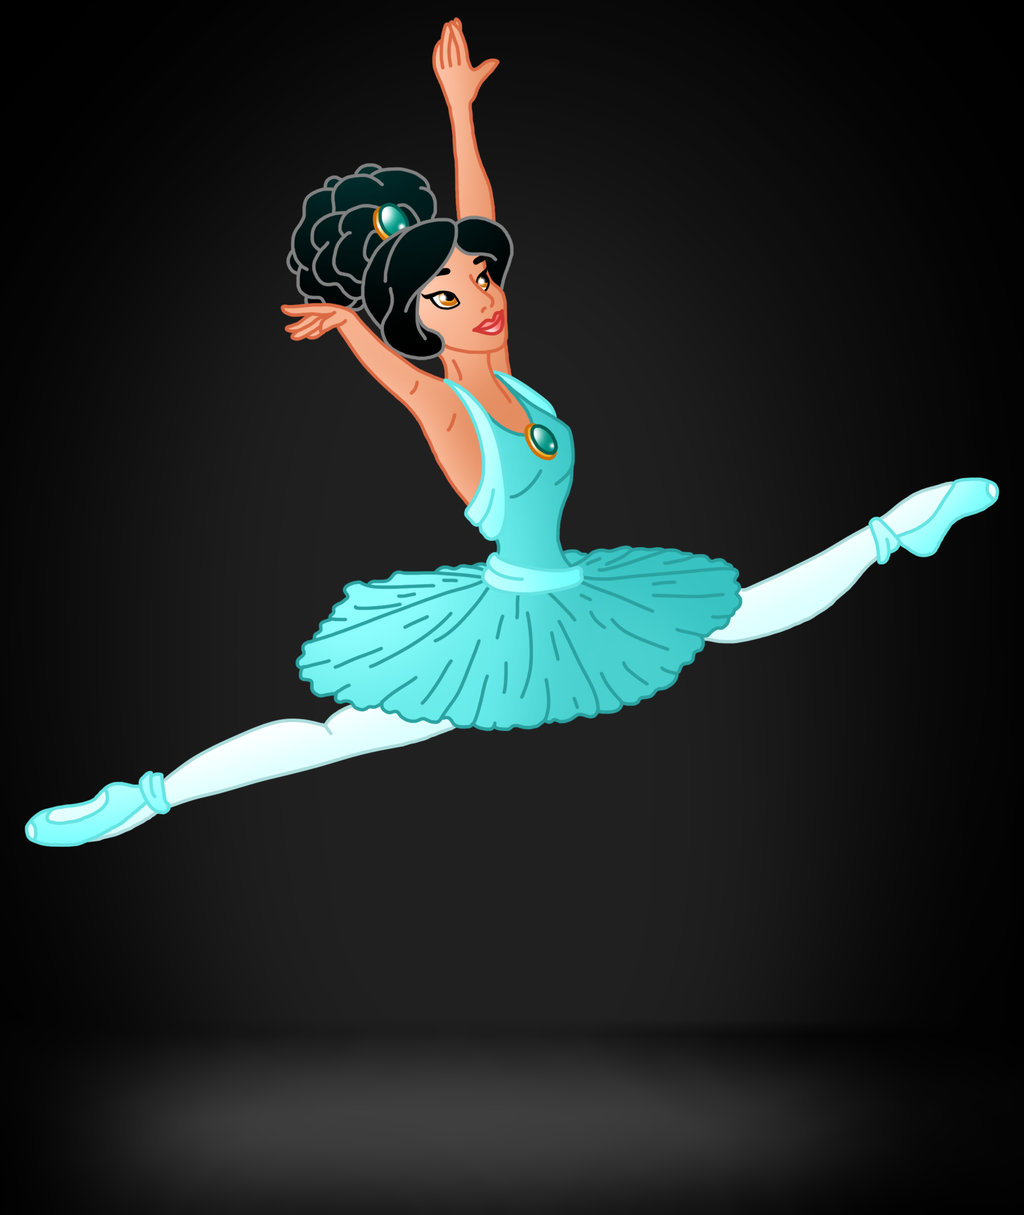 Disney Ballerina: Jasmine by Willemijn1991 on DeviantArt